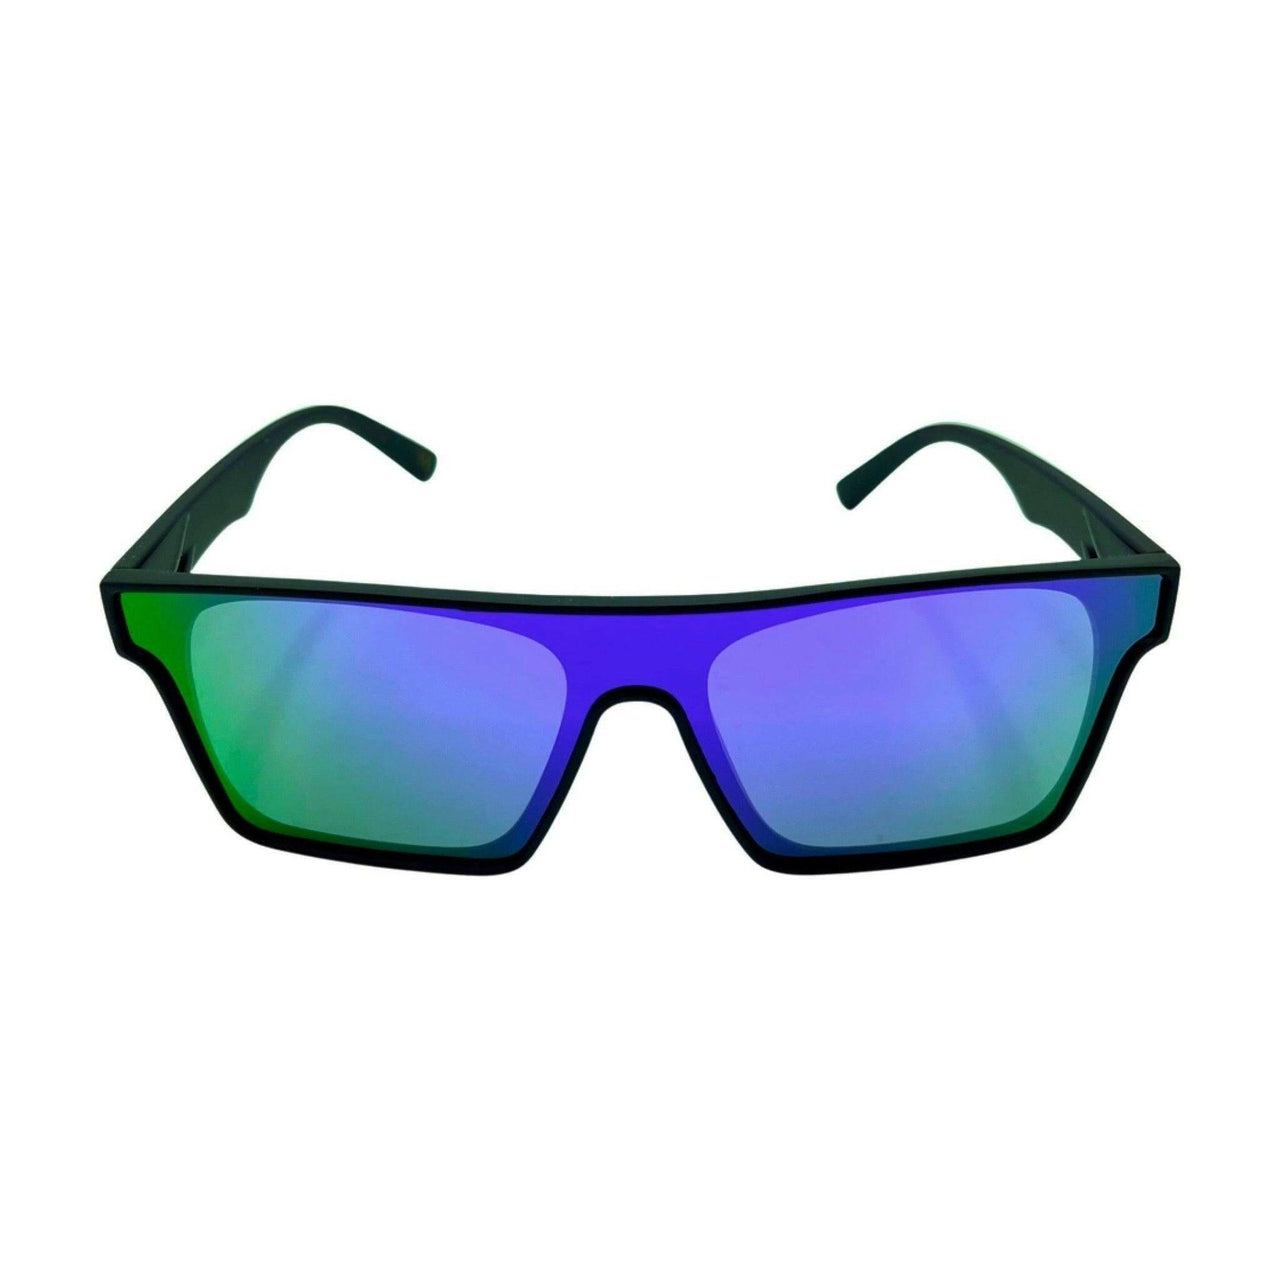 Green Party Shades Polarized Lens Sunglasses